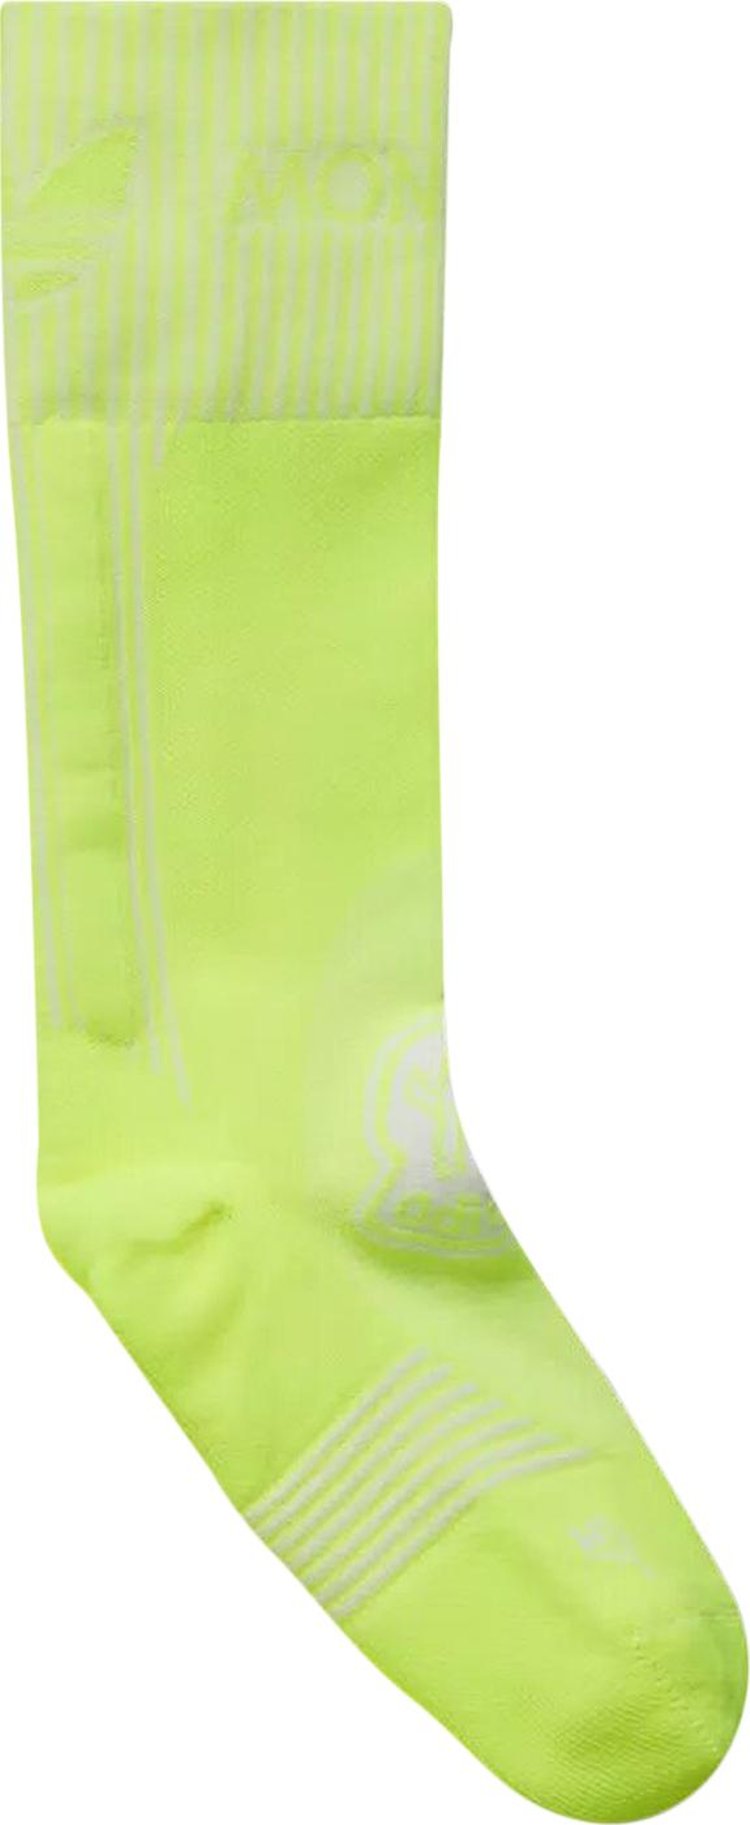 Moncler x adidas Logo Socks 'Lime Green'